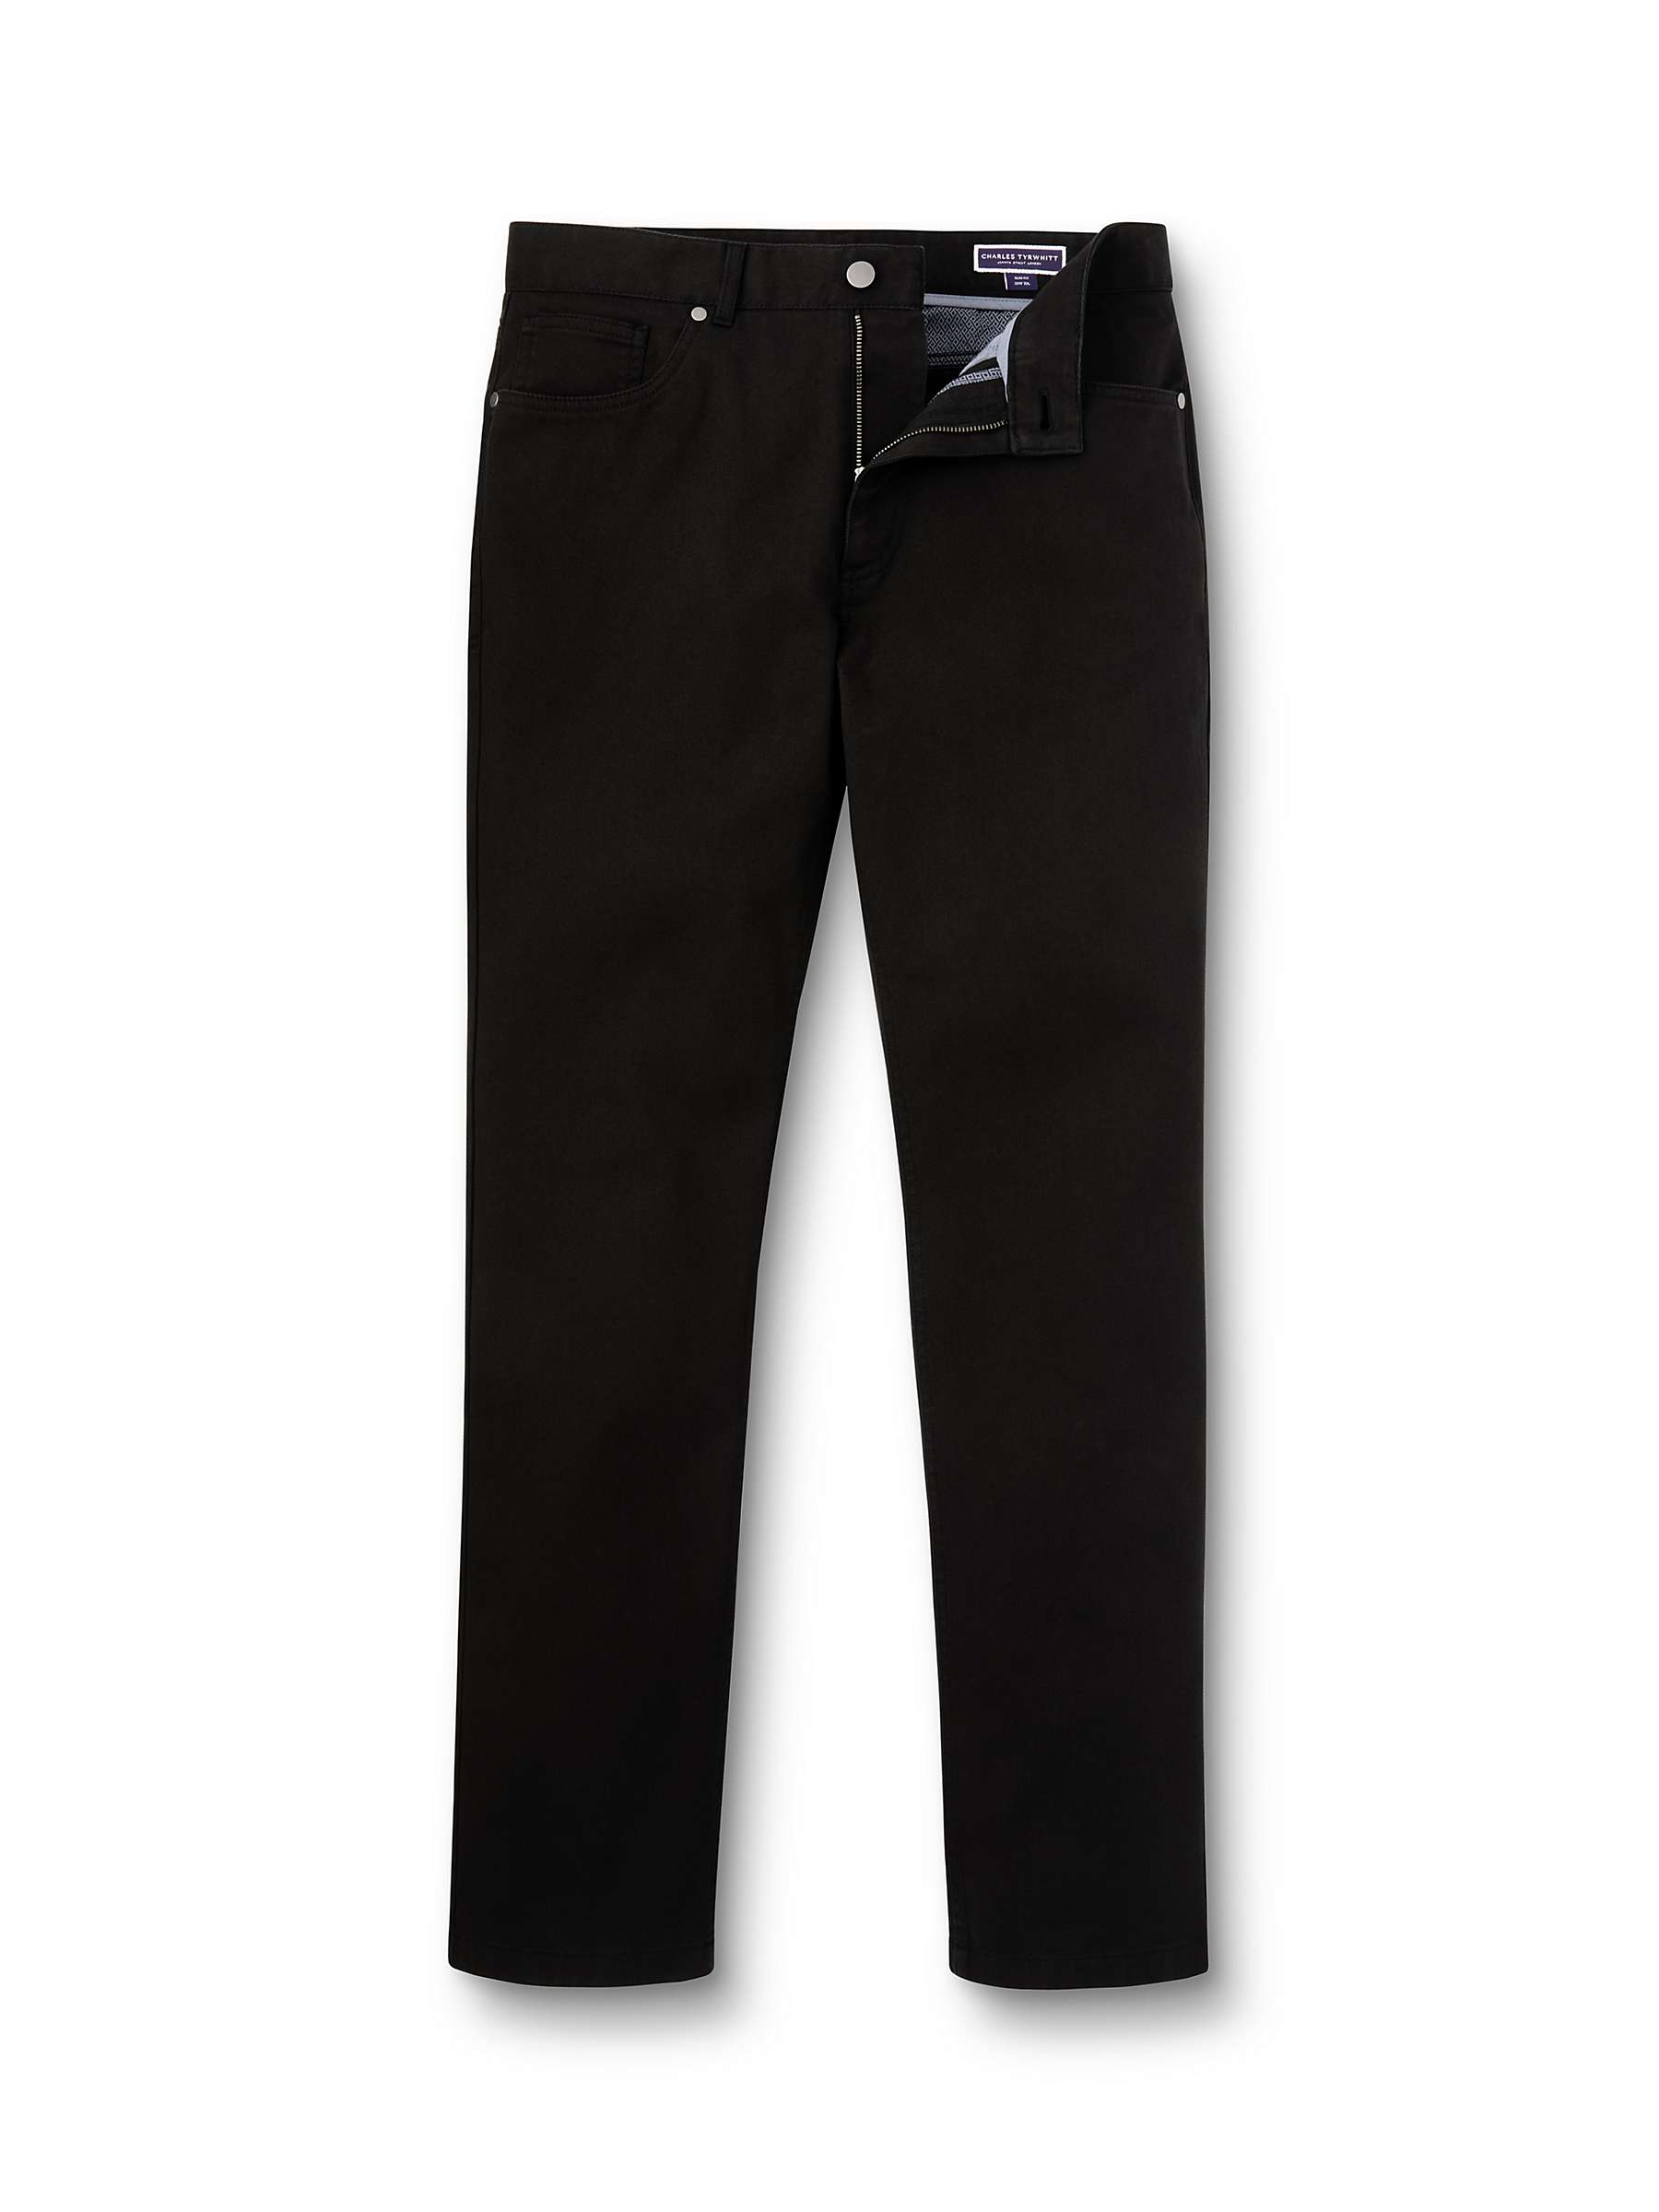 Buy Charles Tyrwhitt Twill 5 Pocket Slim Fit Jeans Online at johnlewis.com